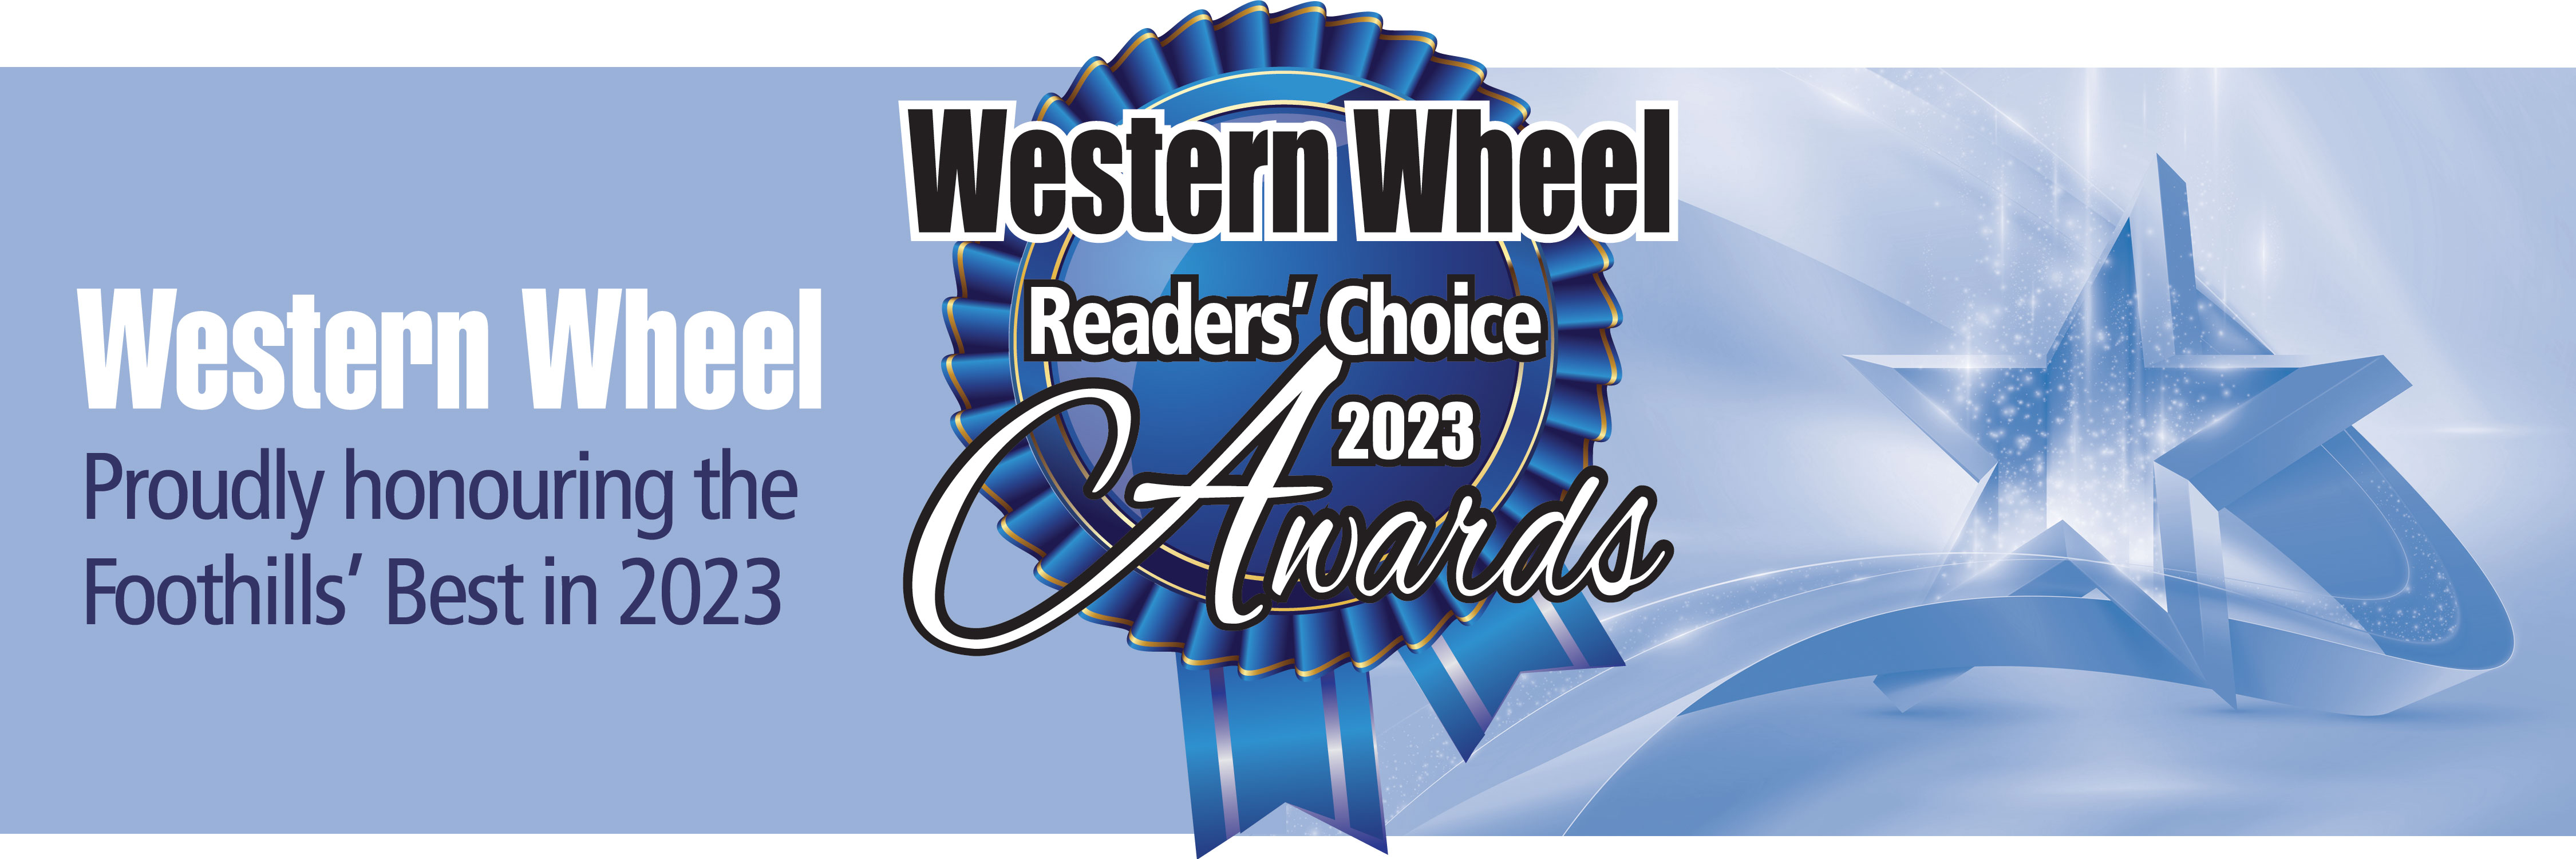 Western Wheel Readers' Choice